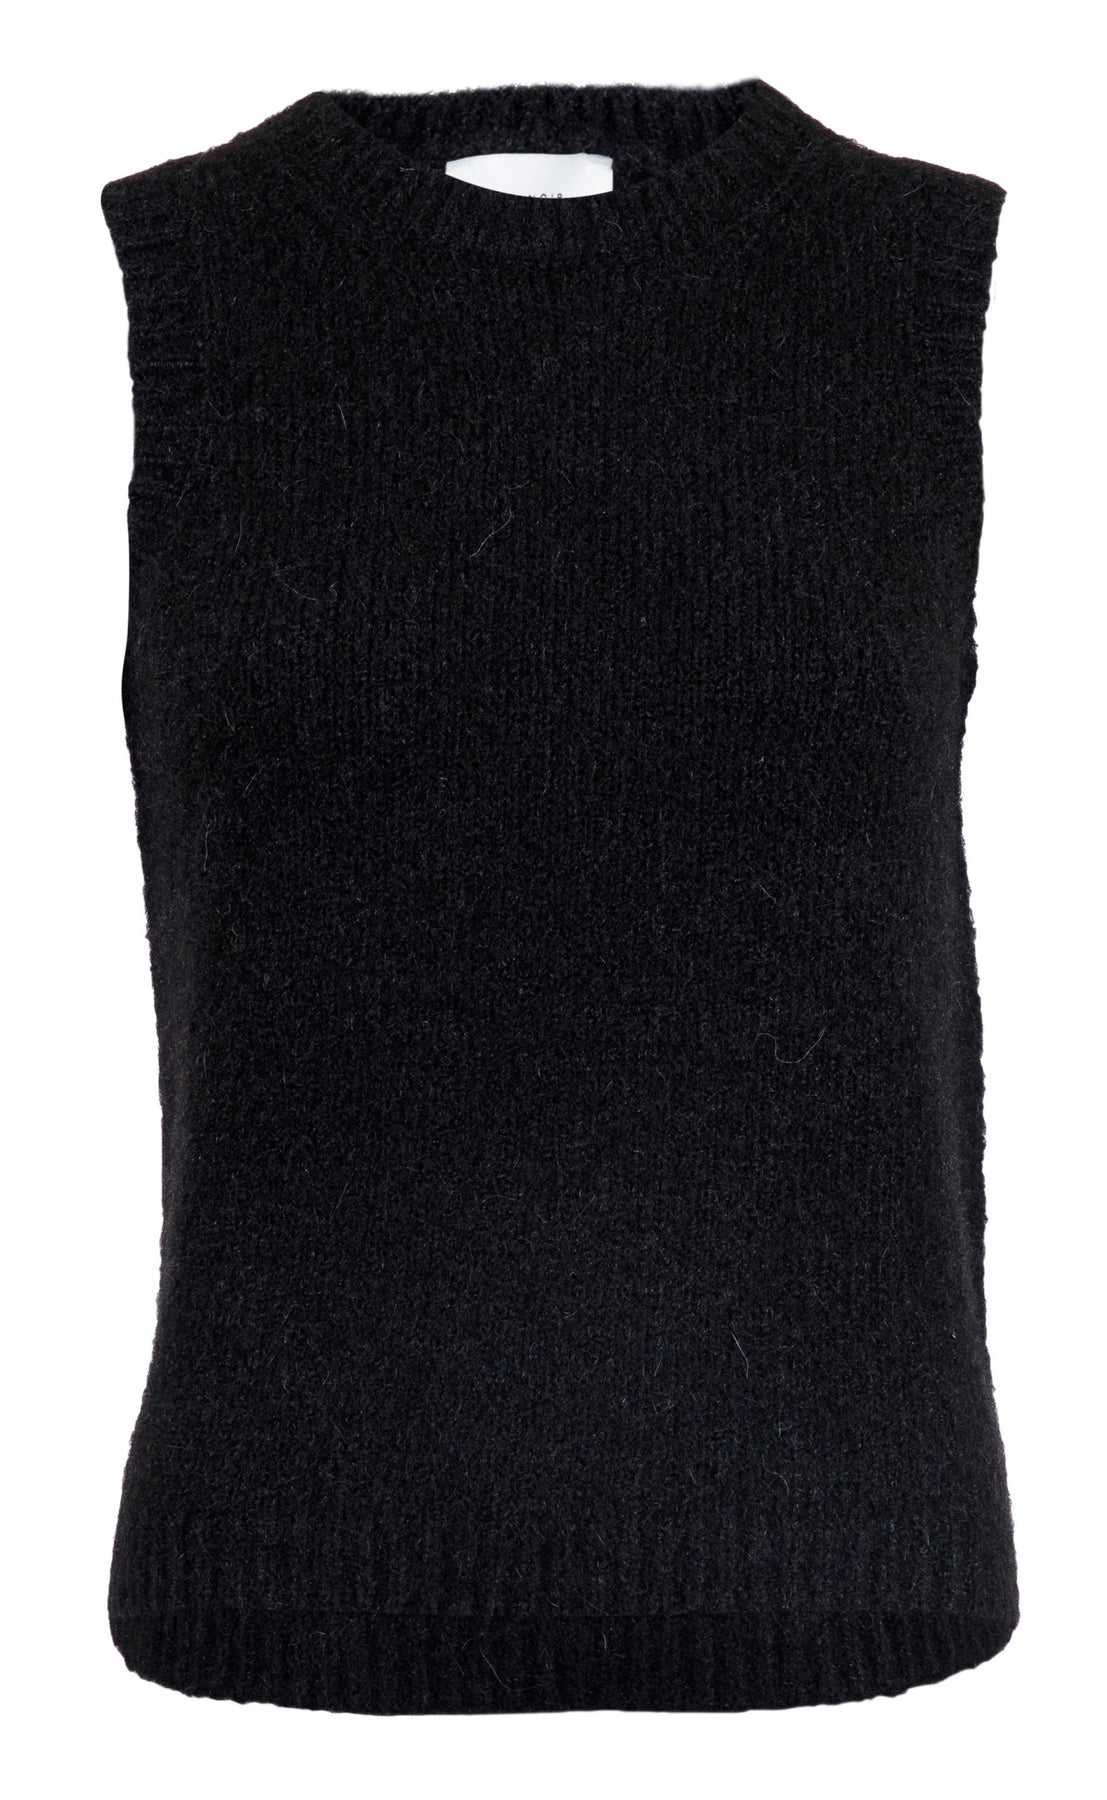 Franko Knit Waistcoat - Black - Neo Noir - Gensere - VILLOID.no